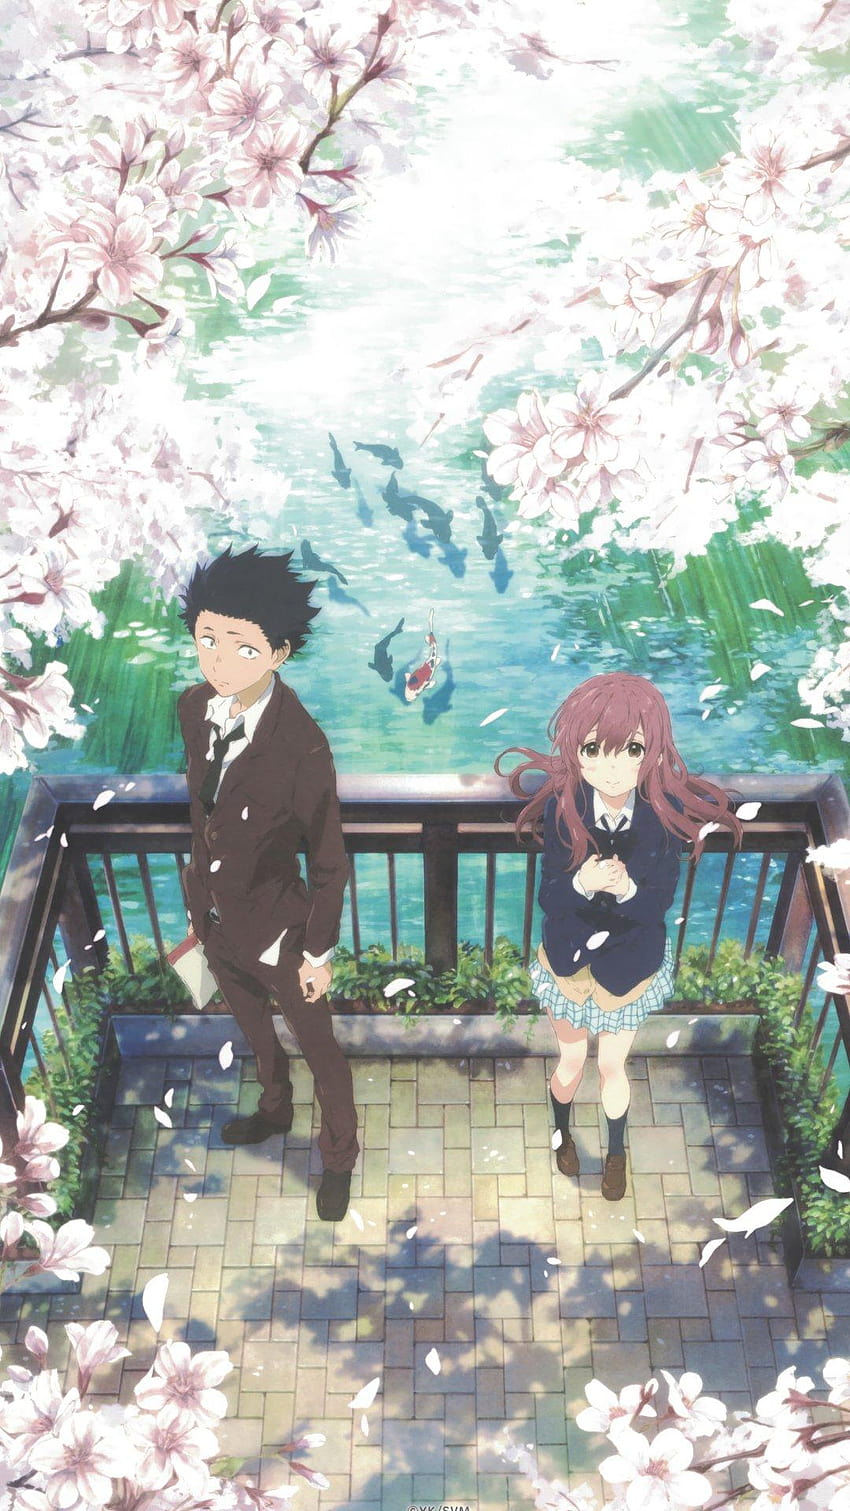 A Silent Voice review: Manga adaptation lacks emotional force